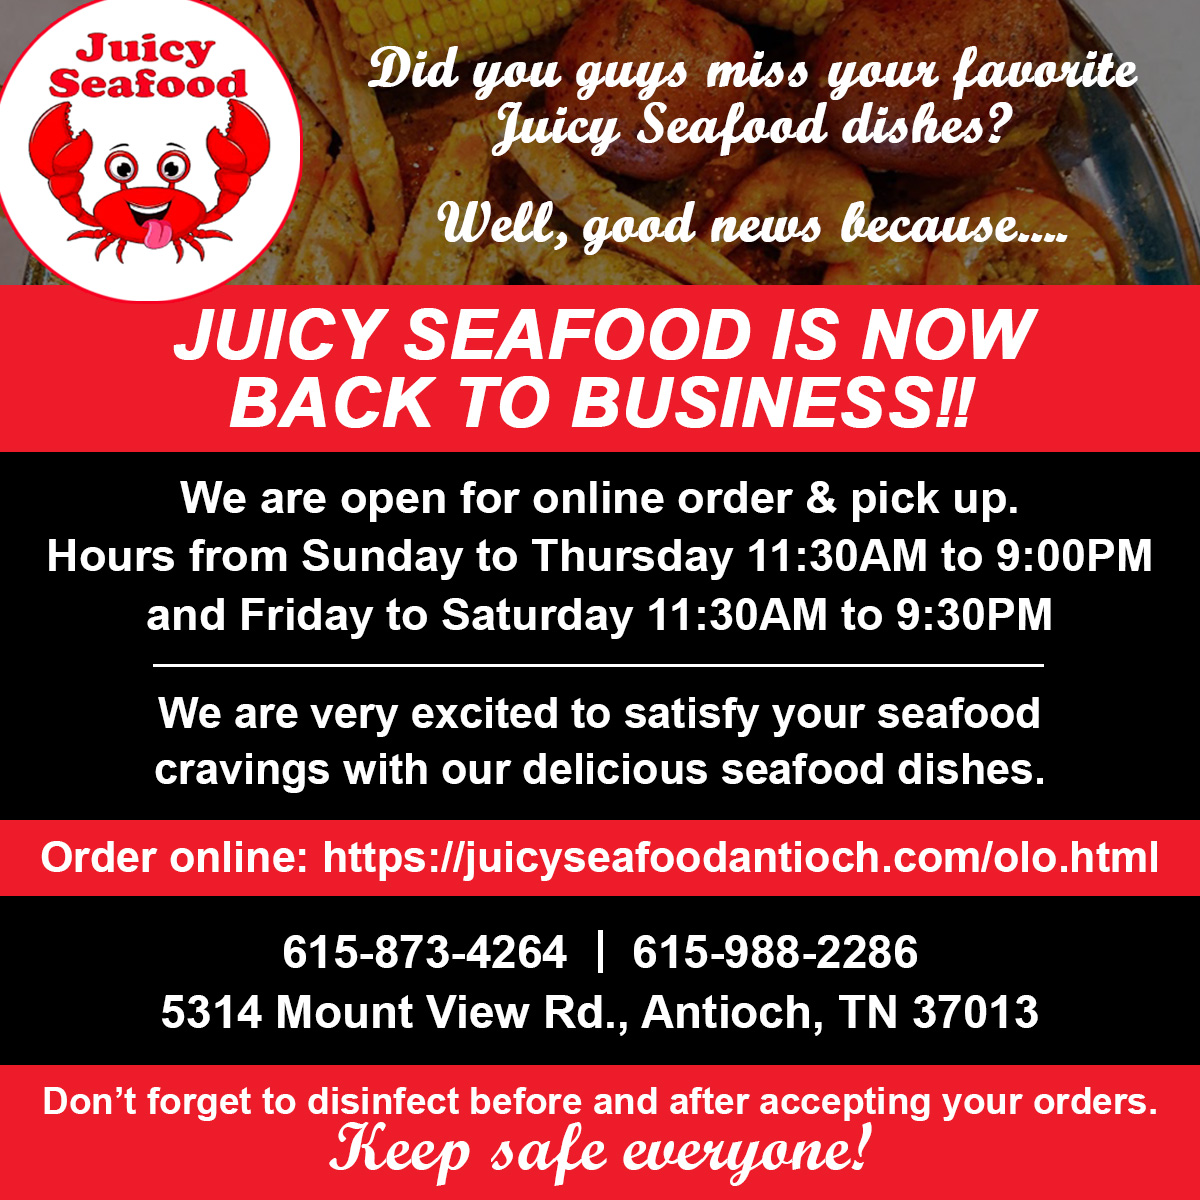 Restaurant_Juicy Seafood